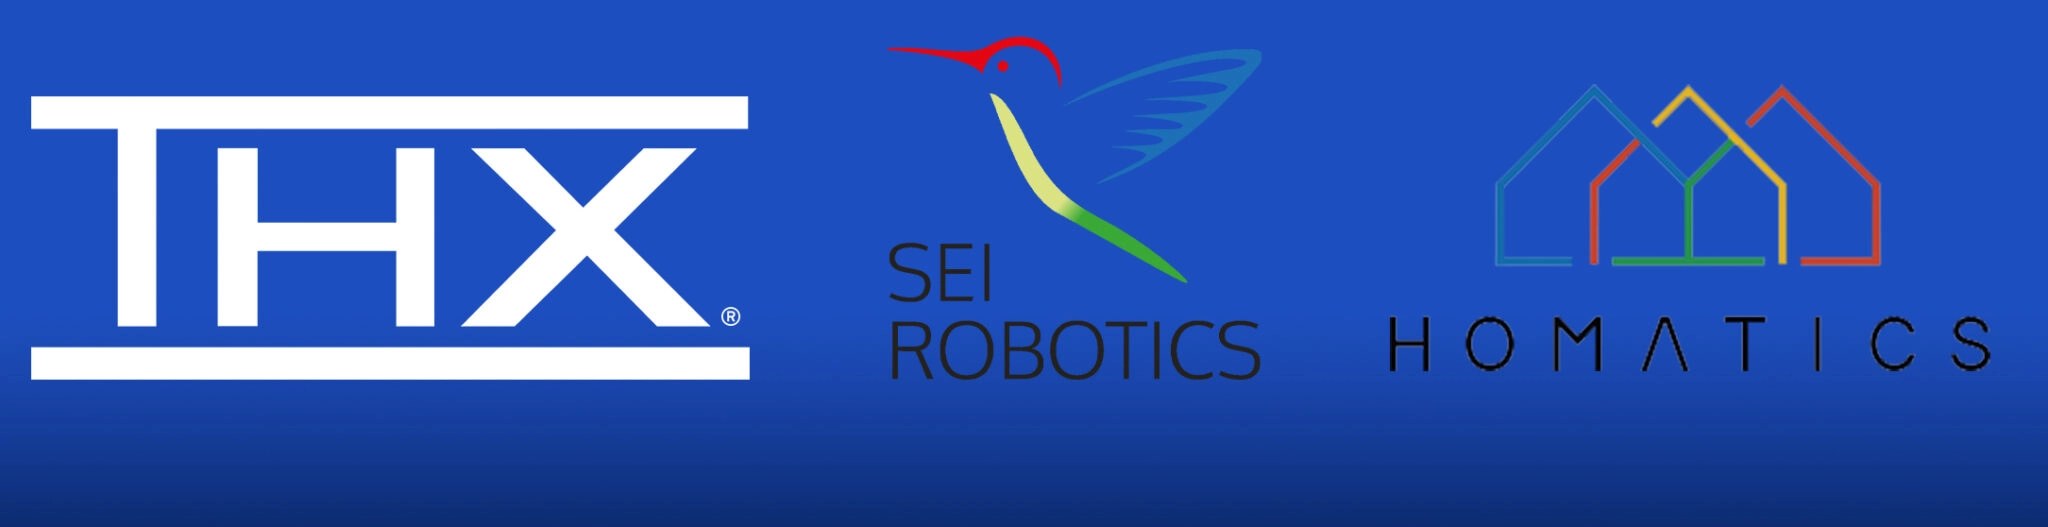 THX Ltd., SEI Robotics, Homatics logos